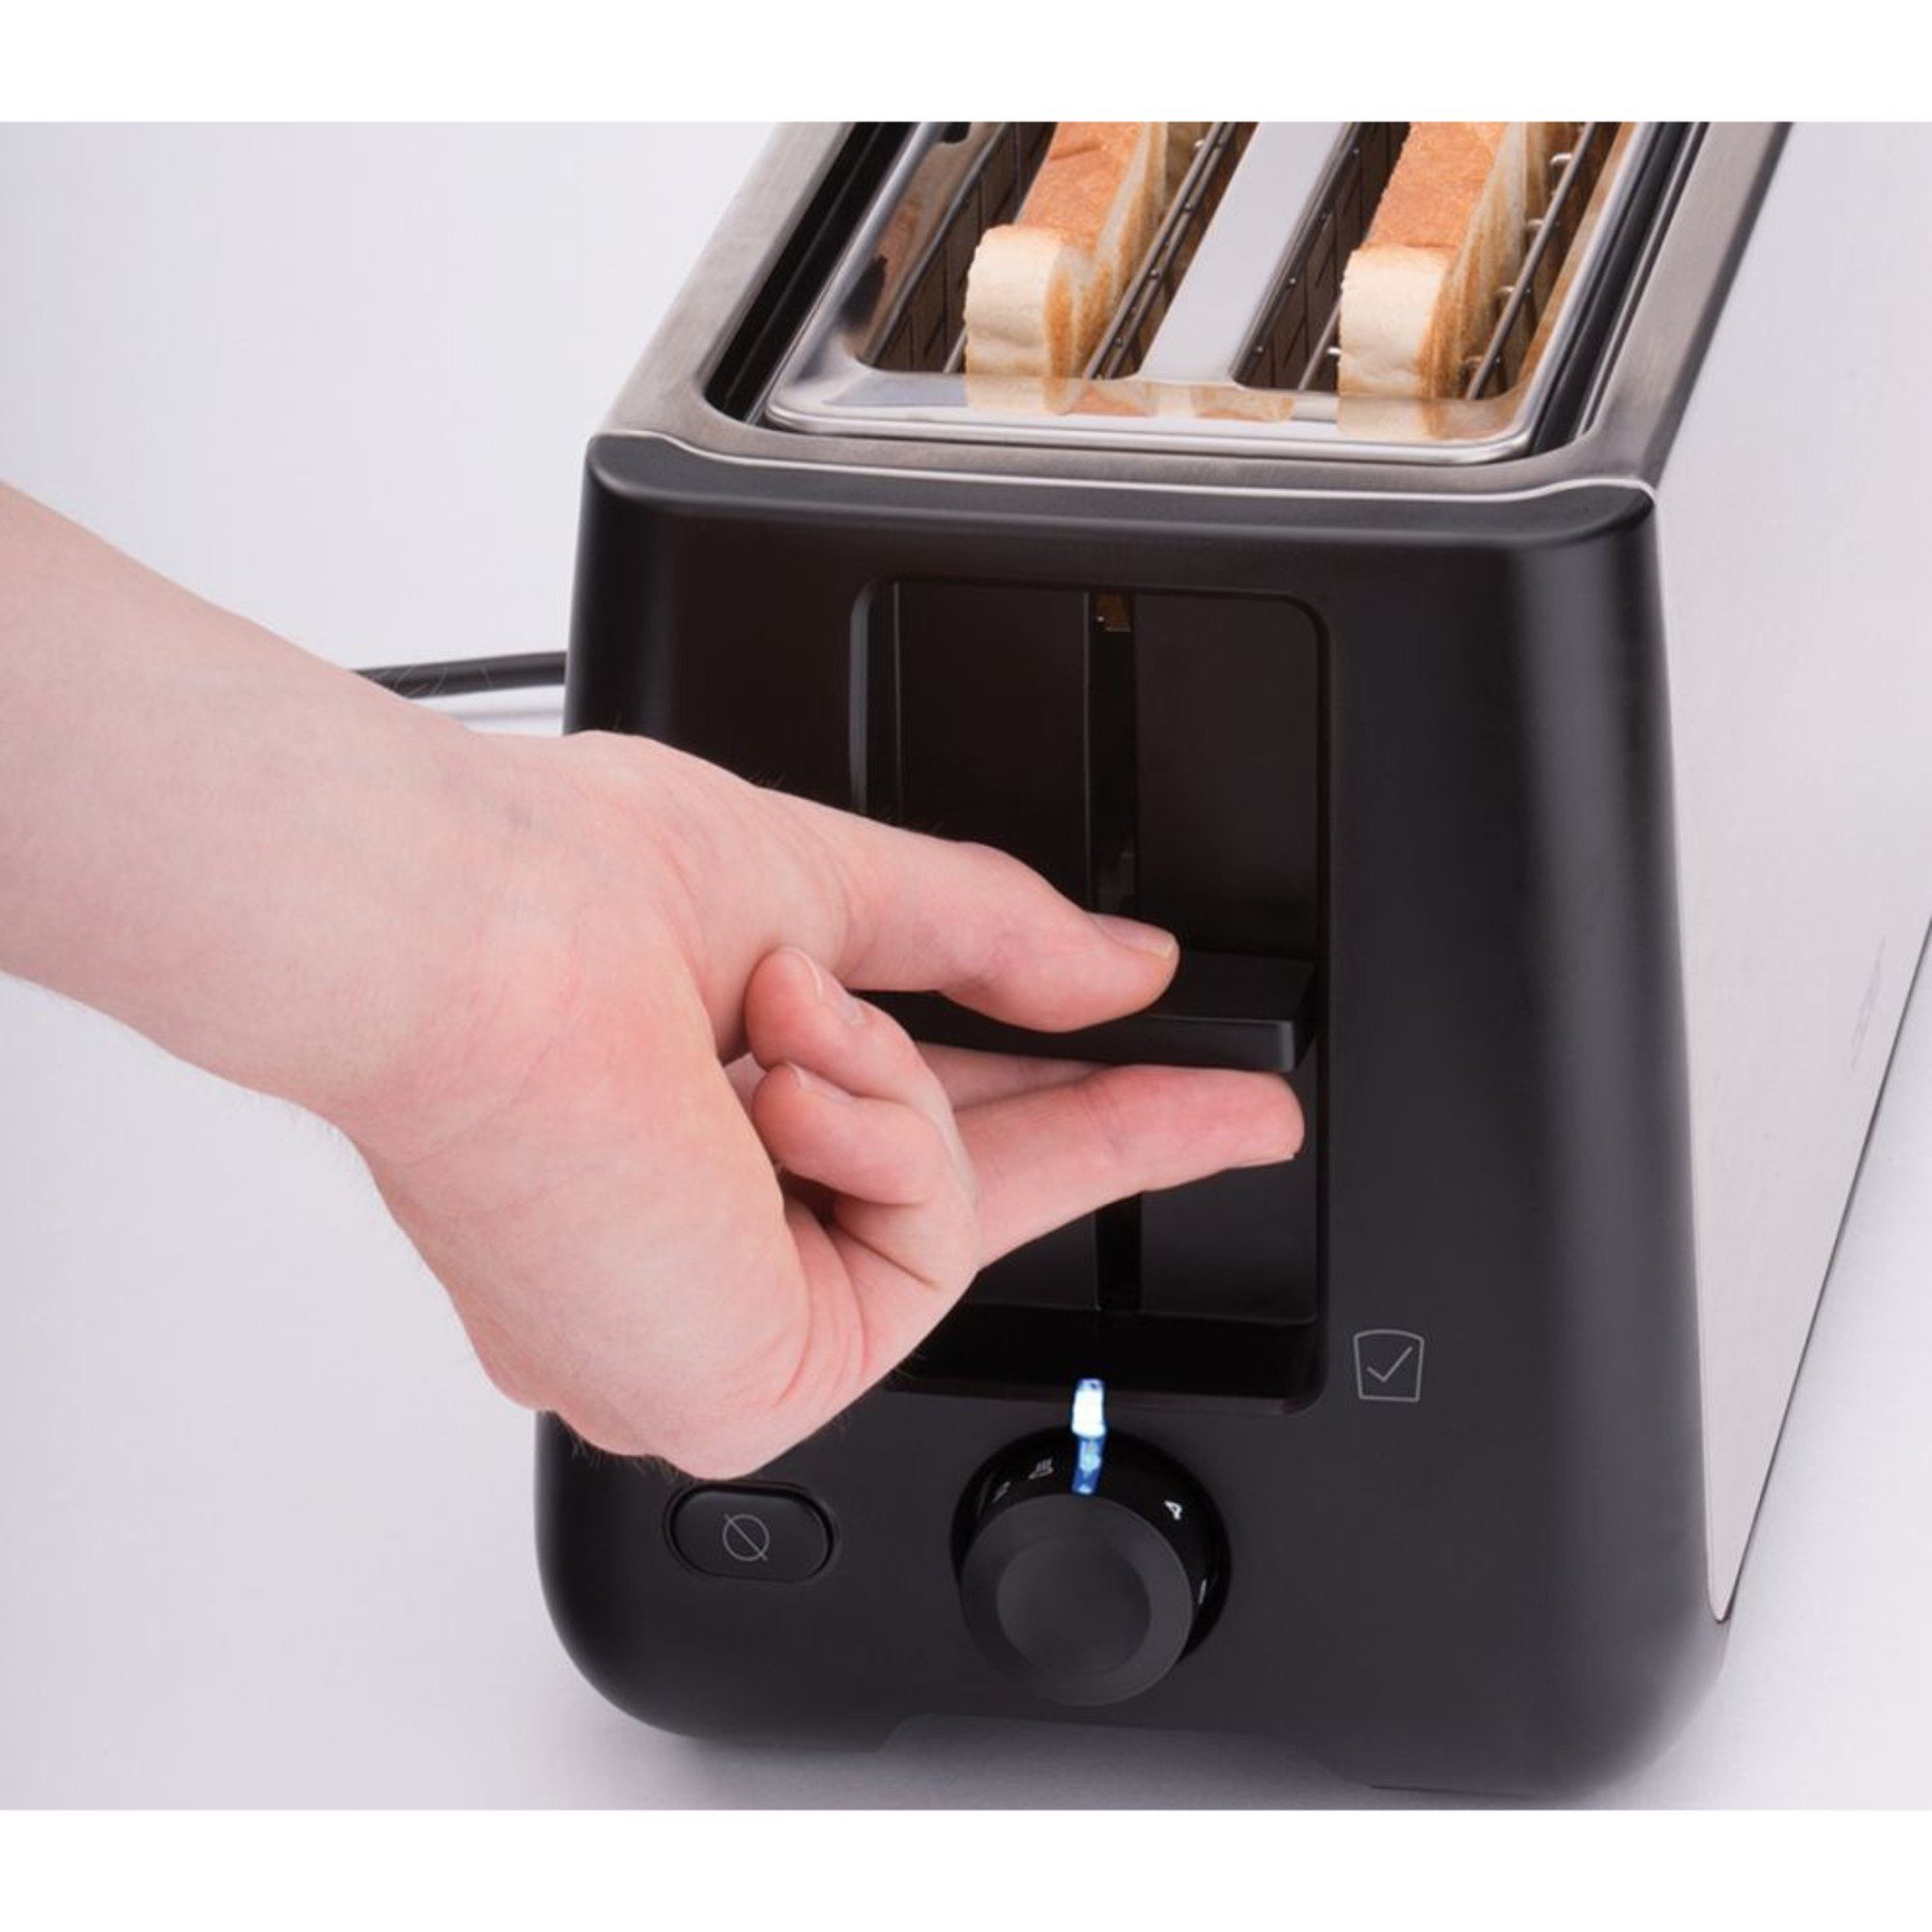 2 King-Size-Toaster 3569, Kaffeebereiter Cloer Watt, für Cloer (1.000